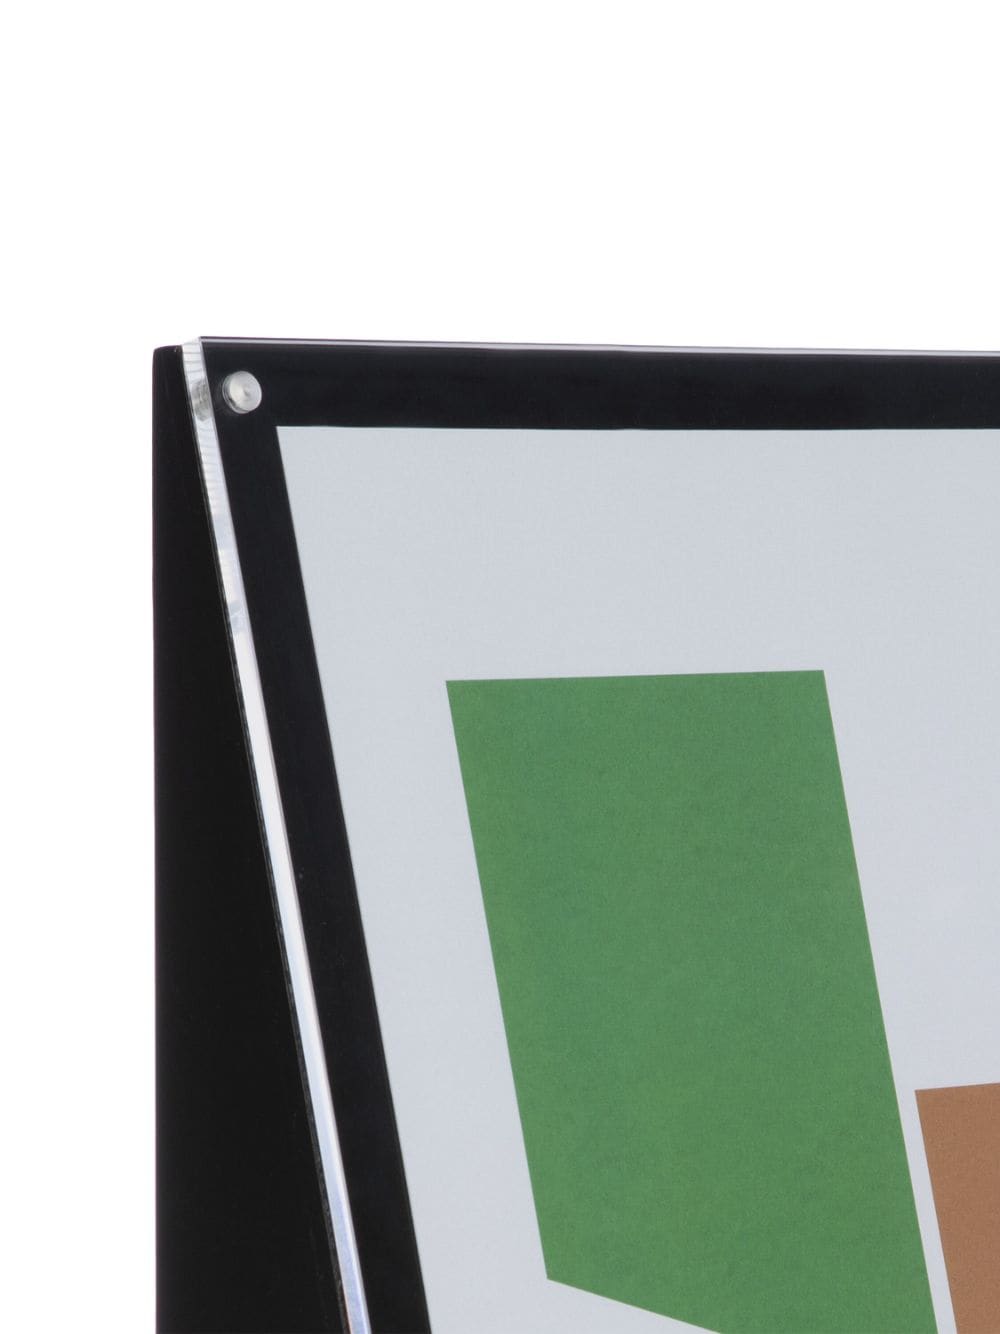 XLBoom Angolo picture frame (30cm x 21cm) - Zwart